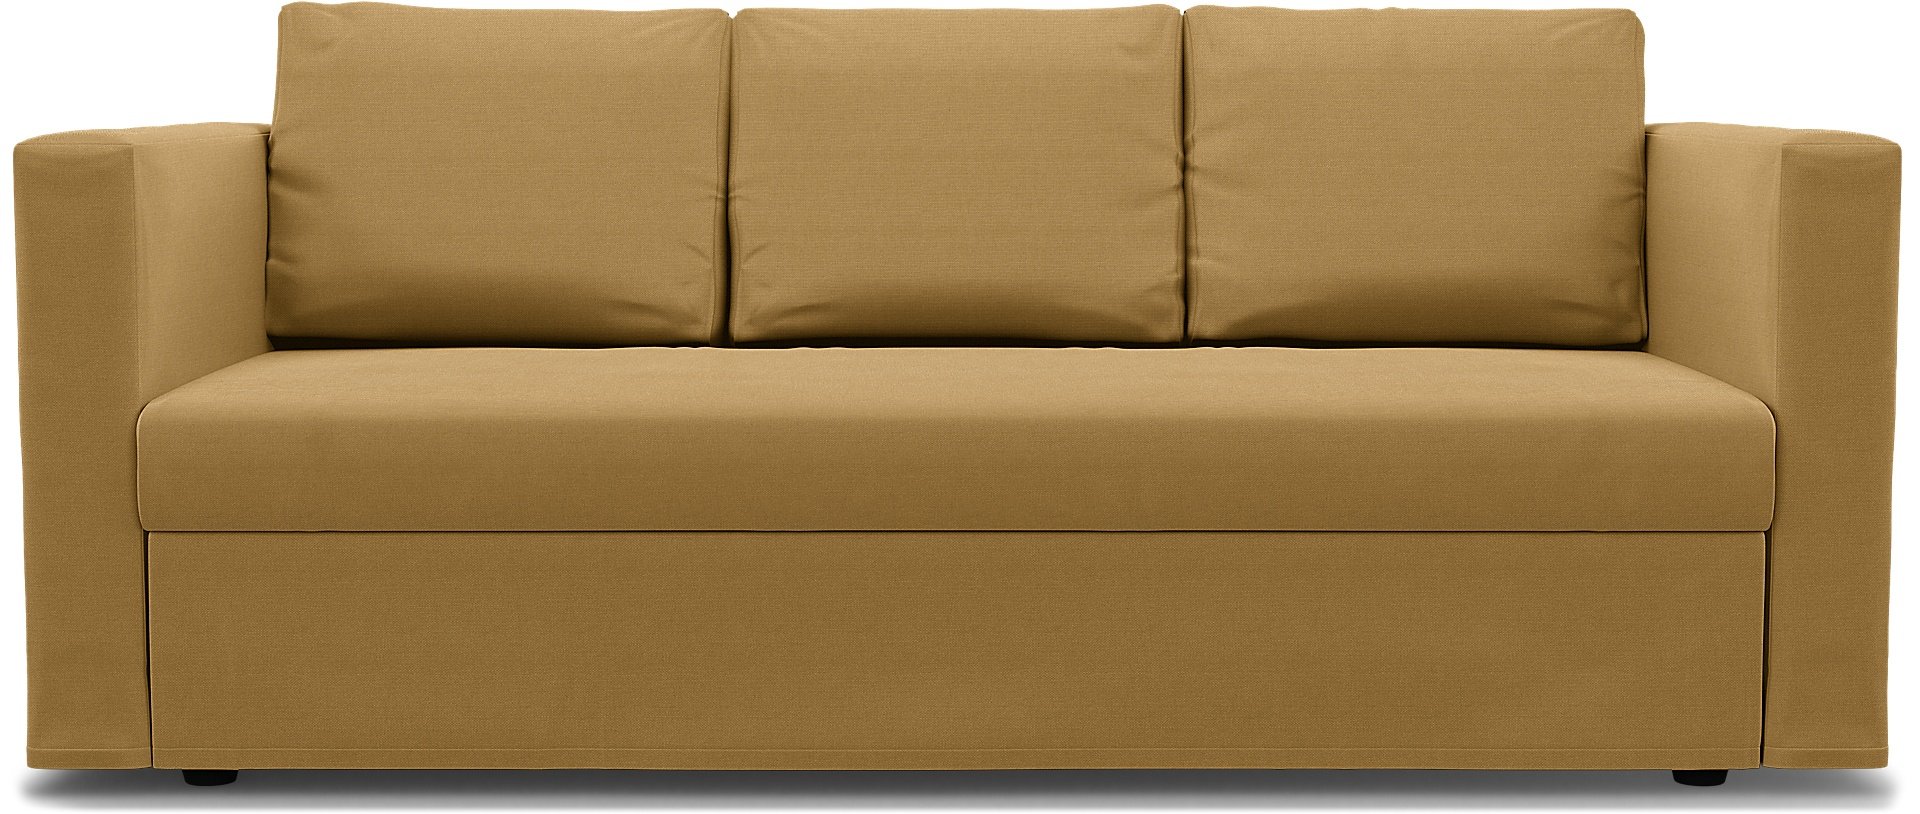 IKEA - Friheten 3 Seater Sofa Bed Cover, Mustard, Linen - Bemz